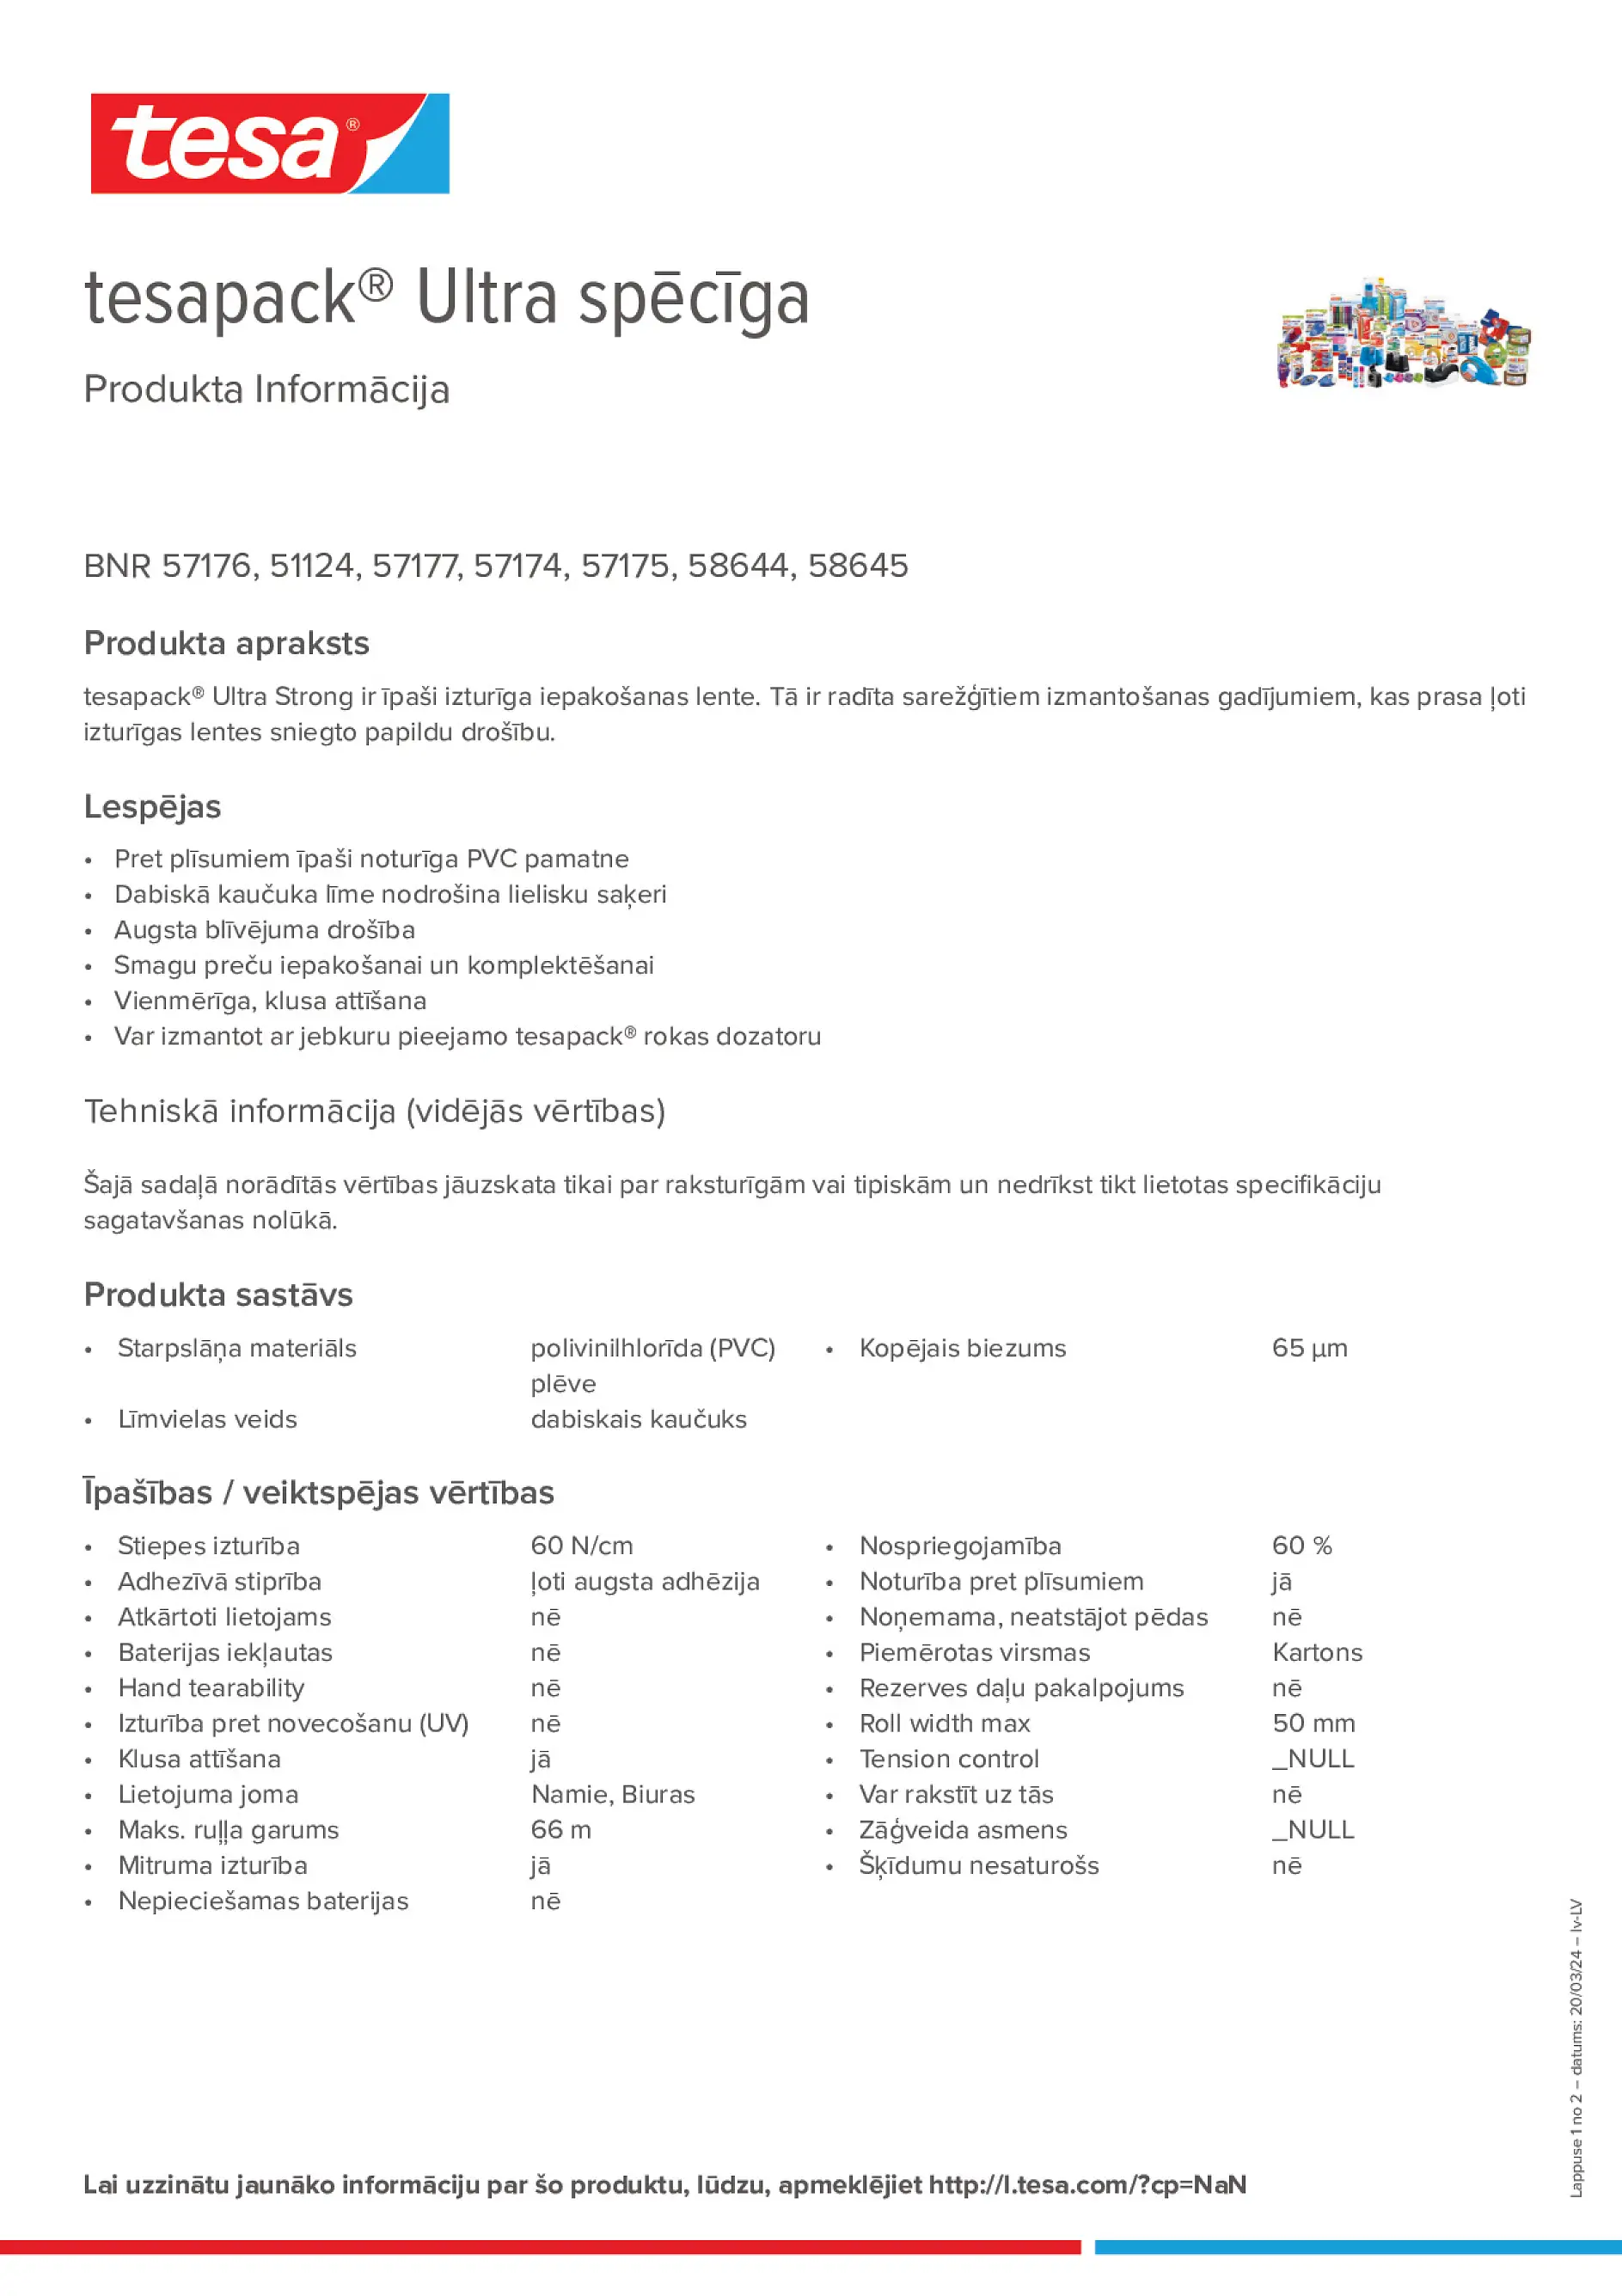 Product information_tesapack® 4124PVC30_lv-LV